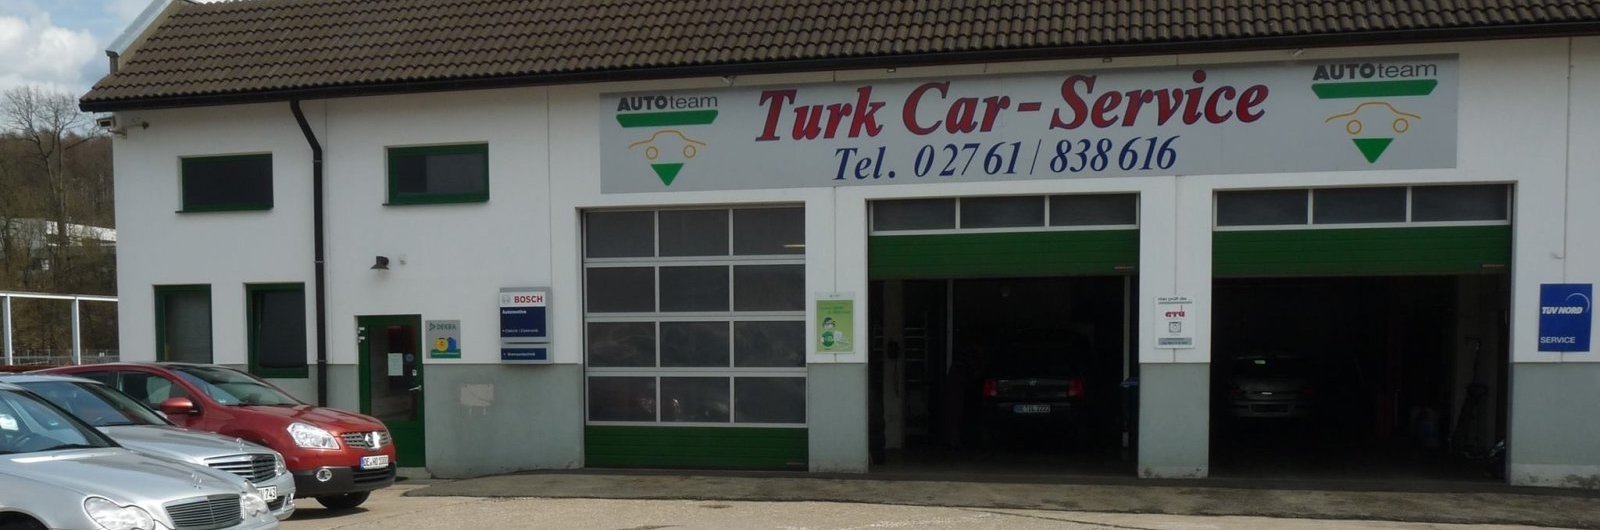 Werkstatt Turk Car-Service in Olpe